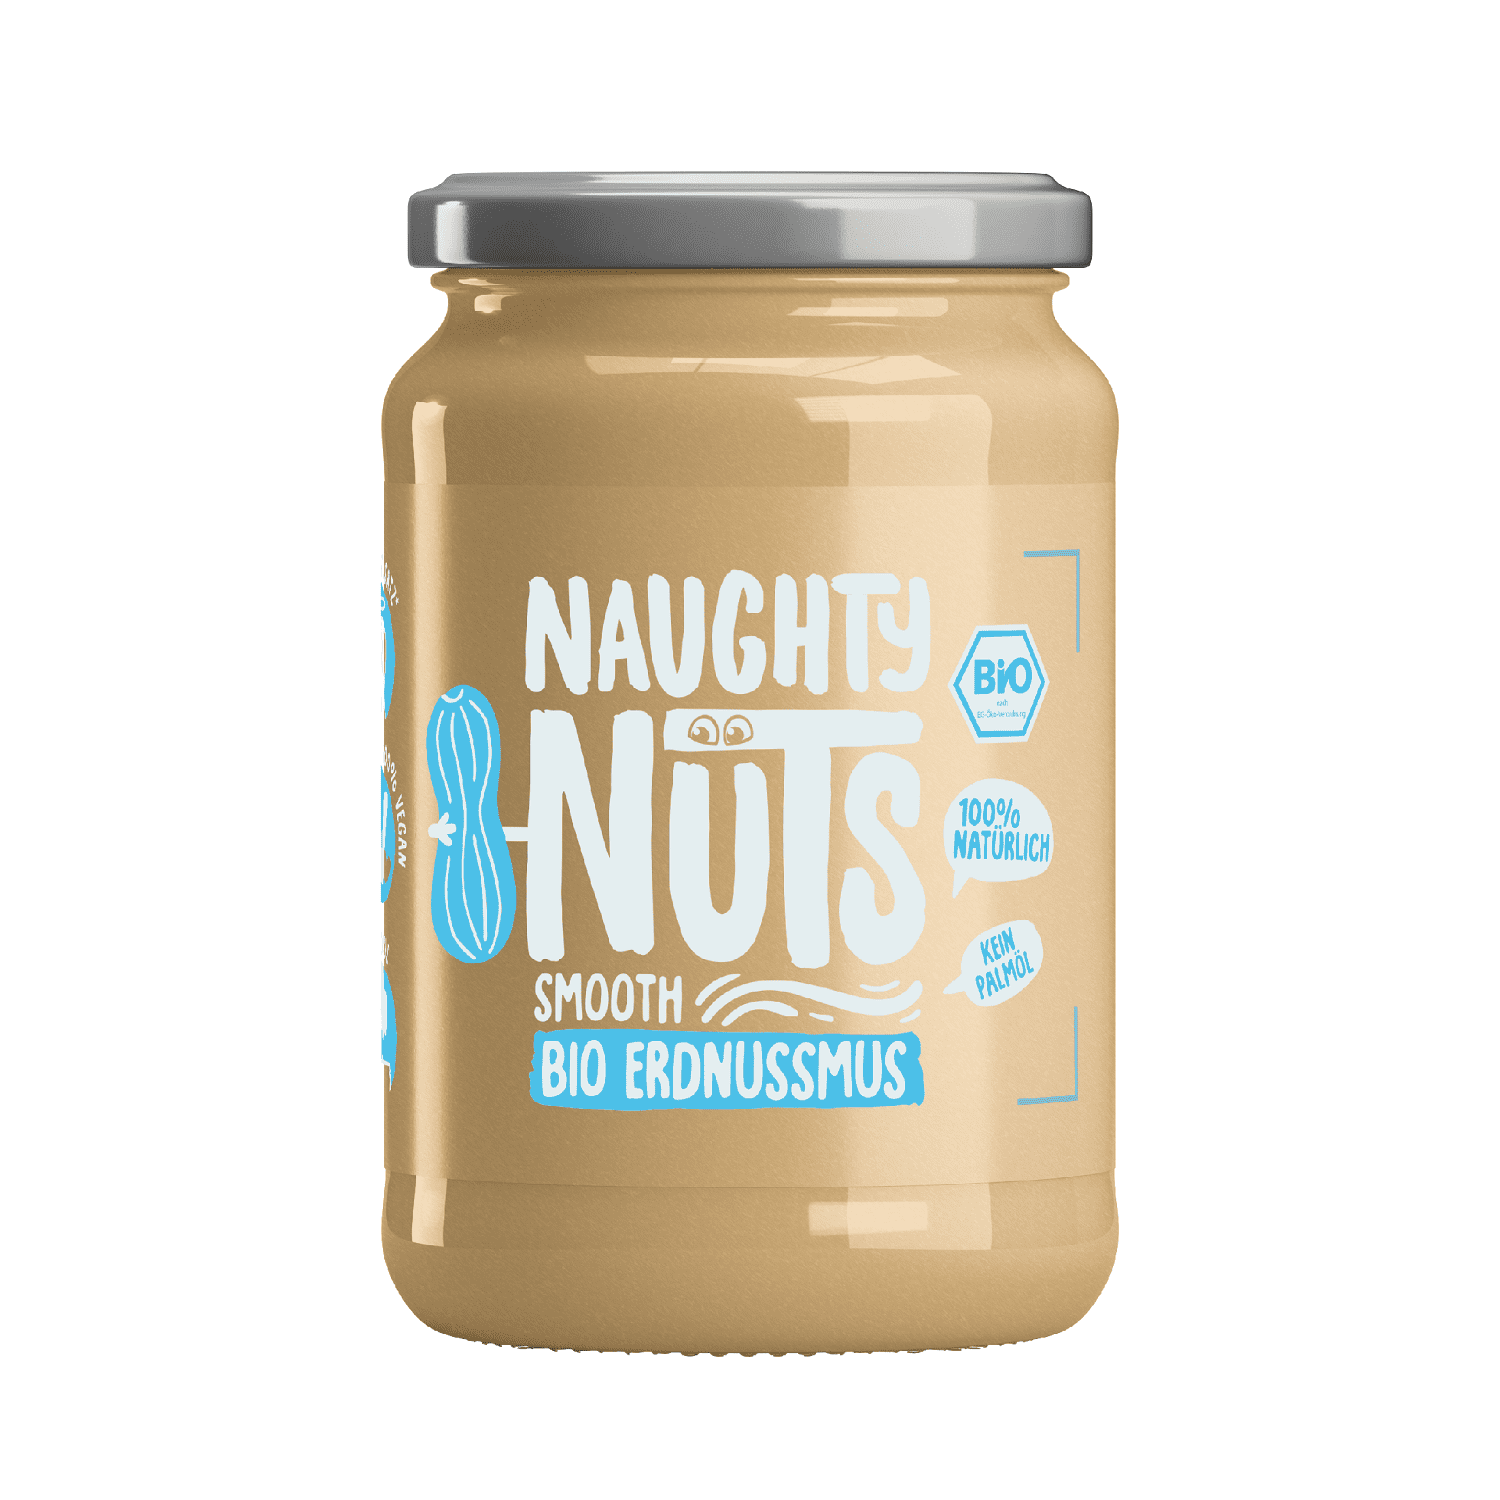 Naughty Nuts Bio Erdnussmus Smooth 500g